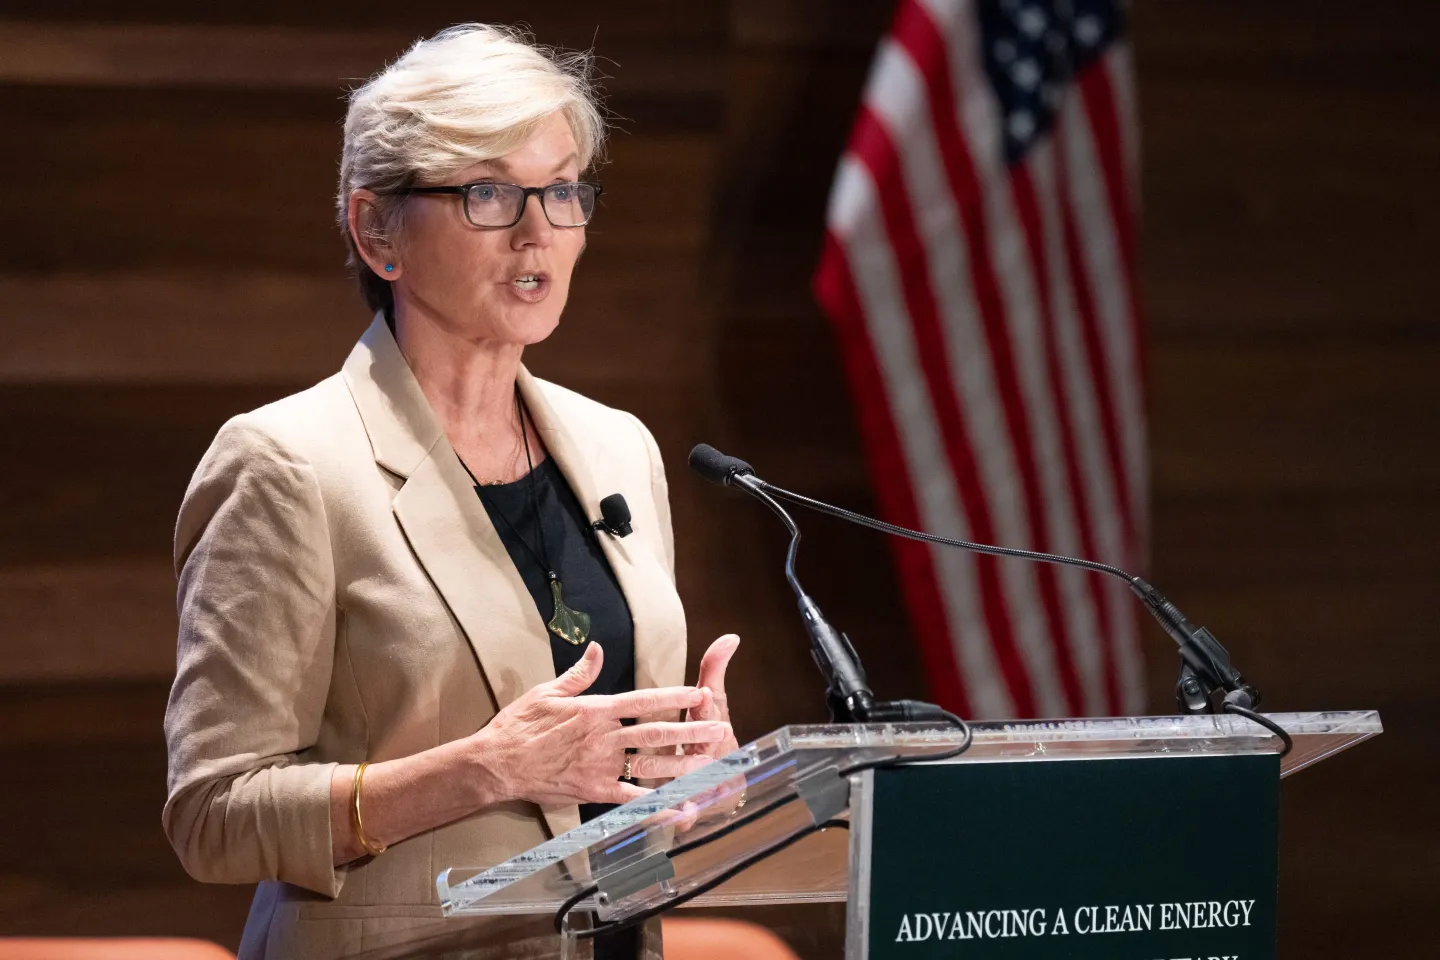 Granholm Calls for Tripling U.S. Nuclear Capacity by 2050